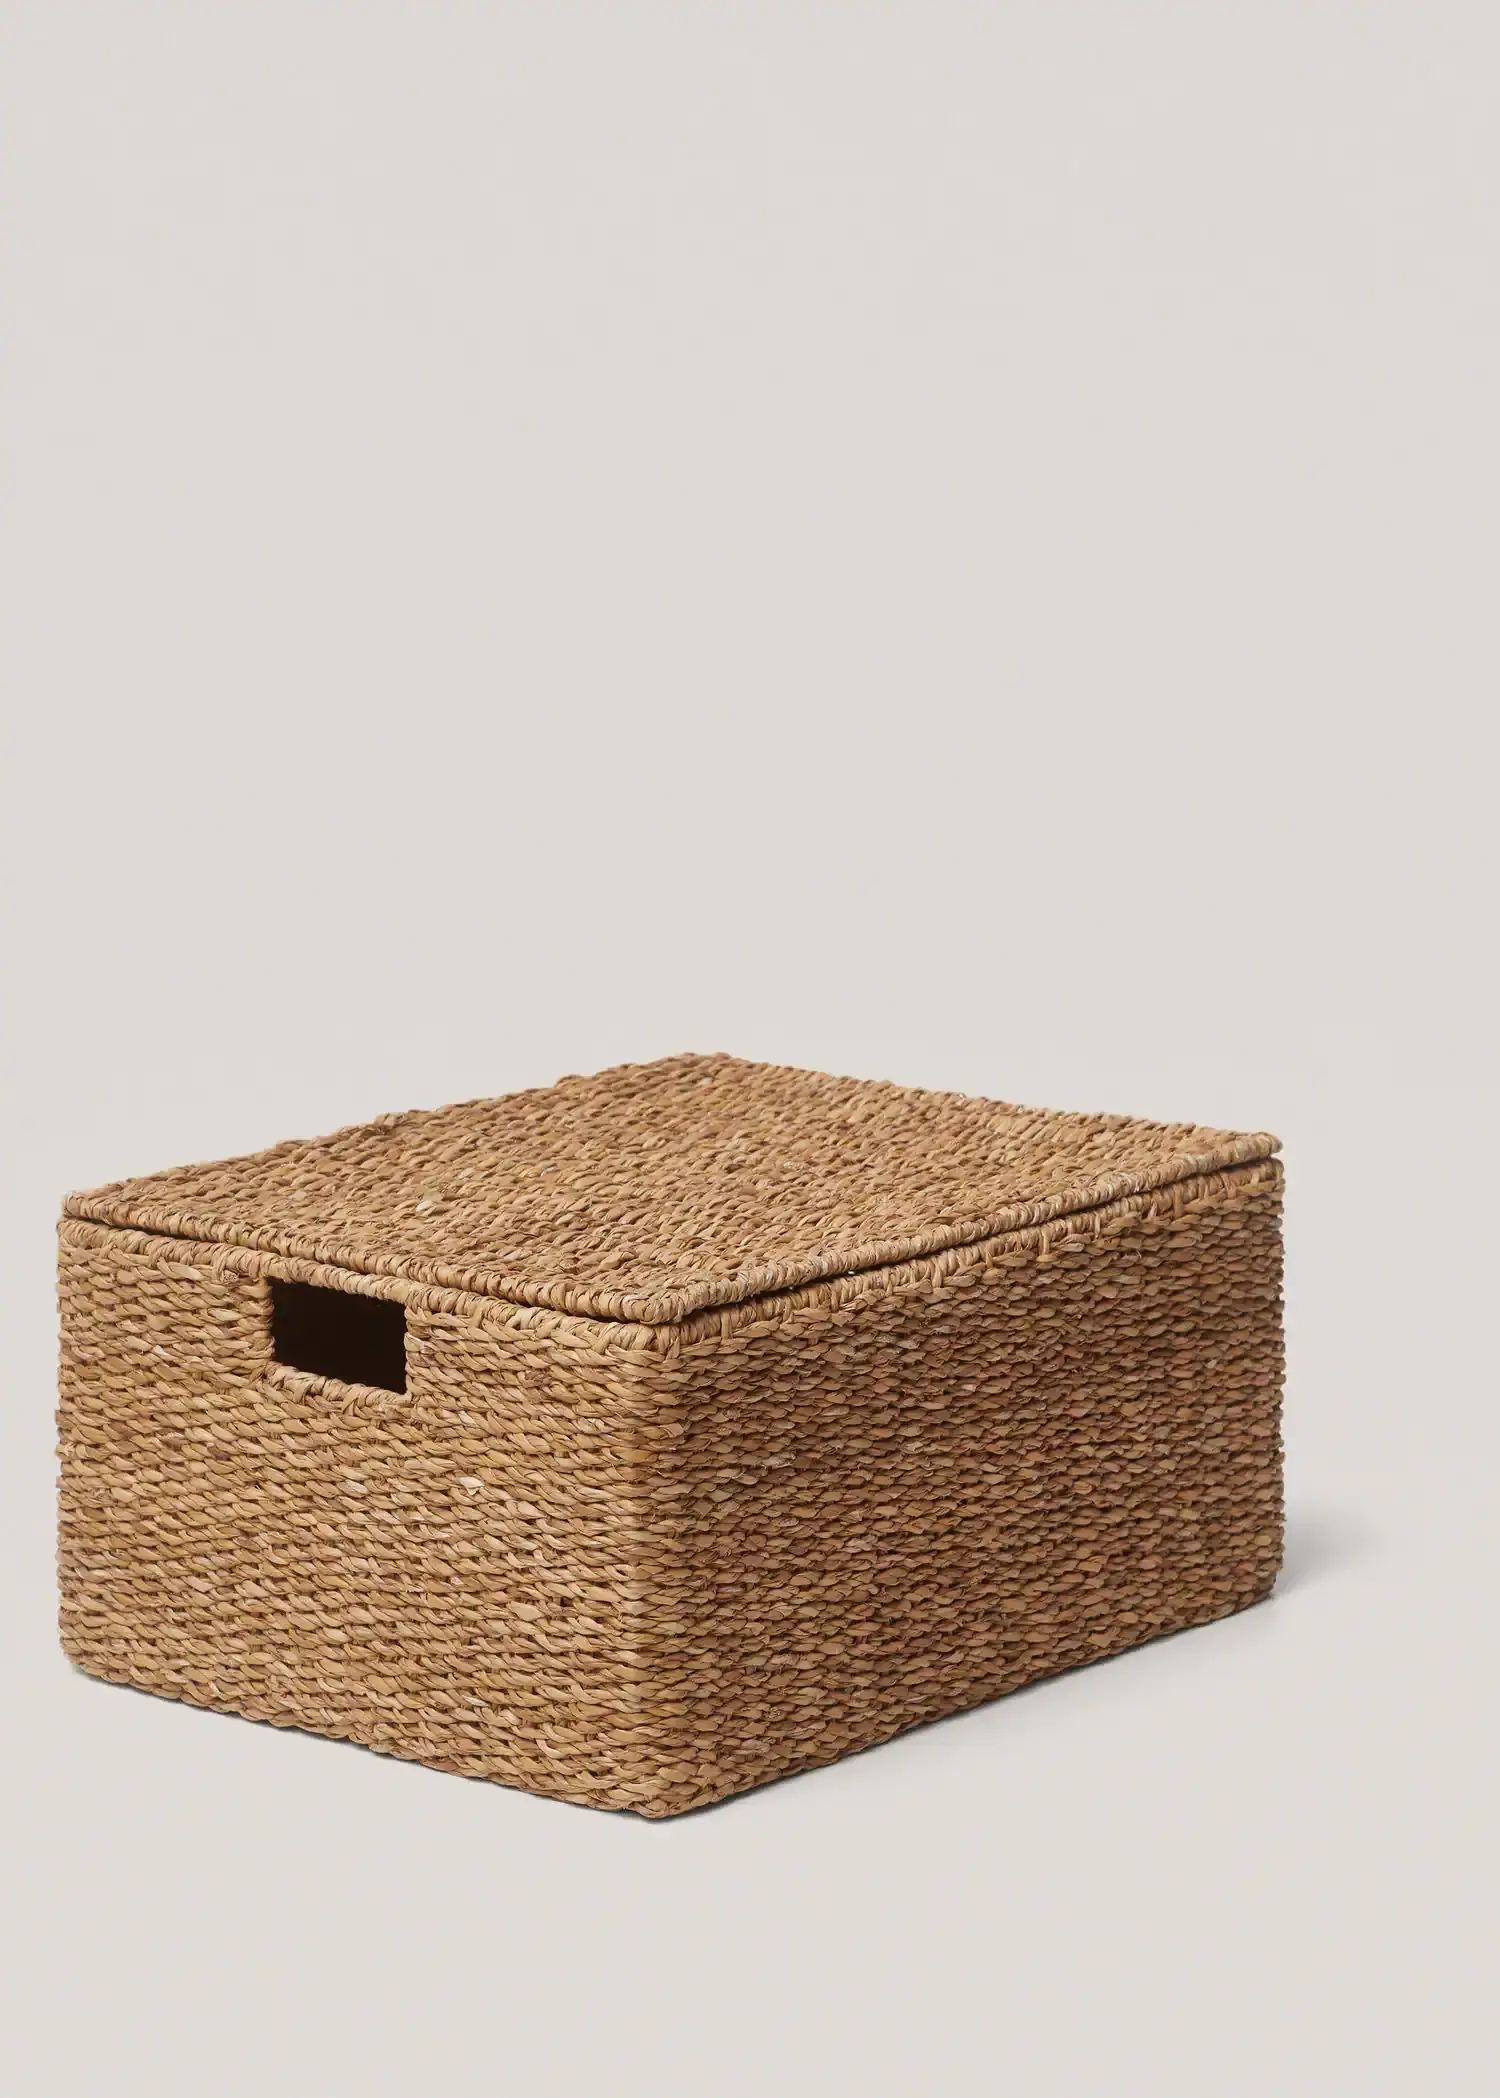 Mango Braided basket with handles 45x35cm. 3